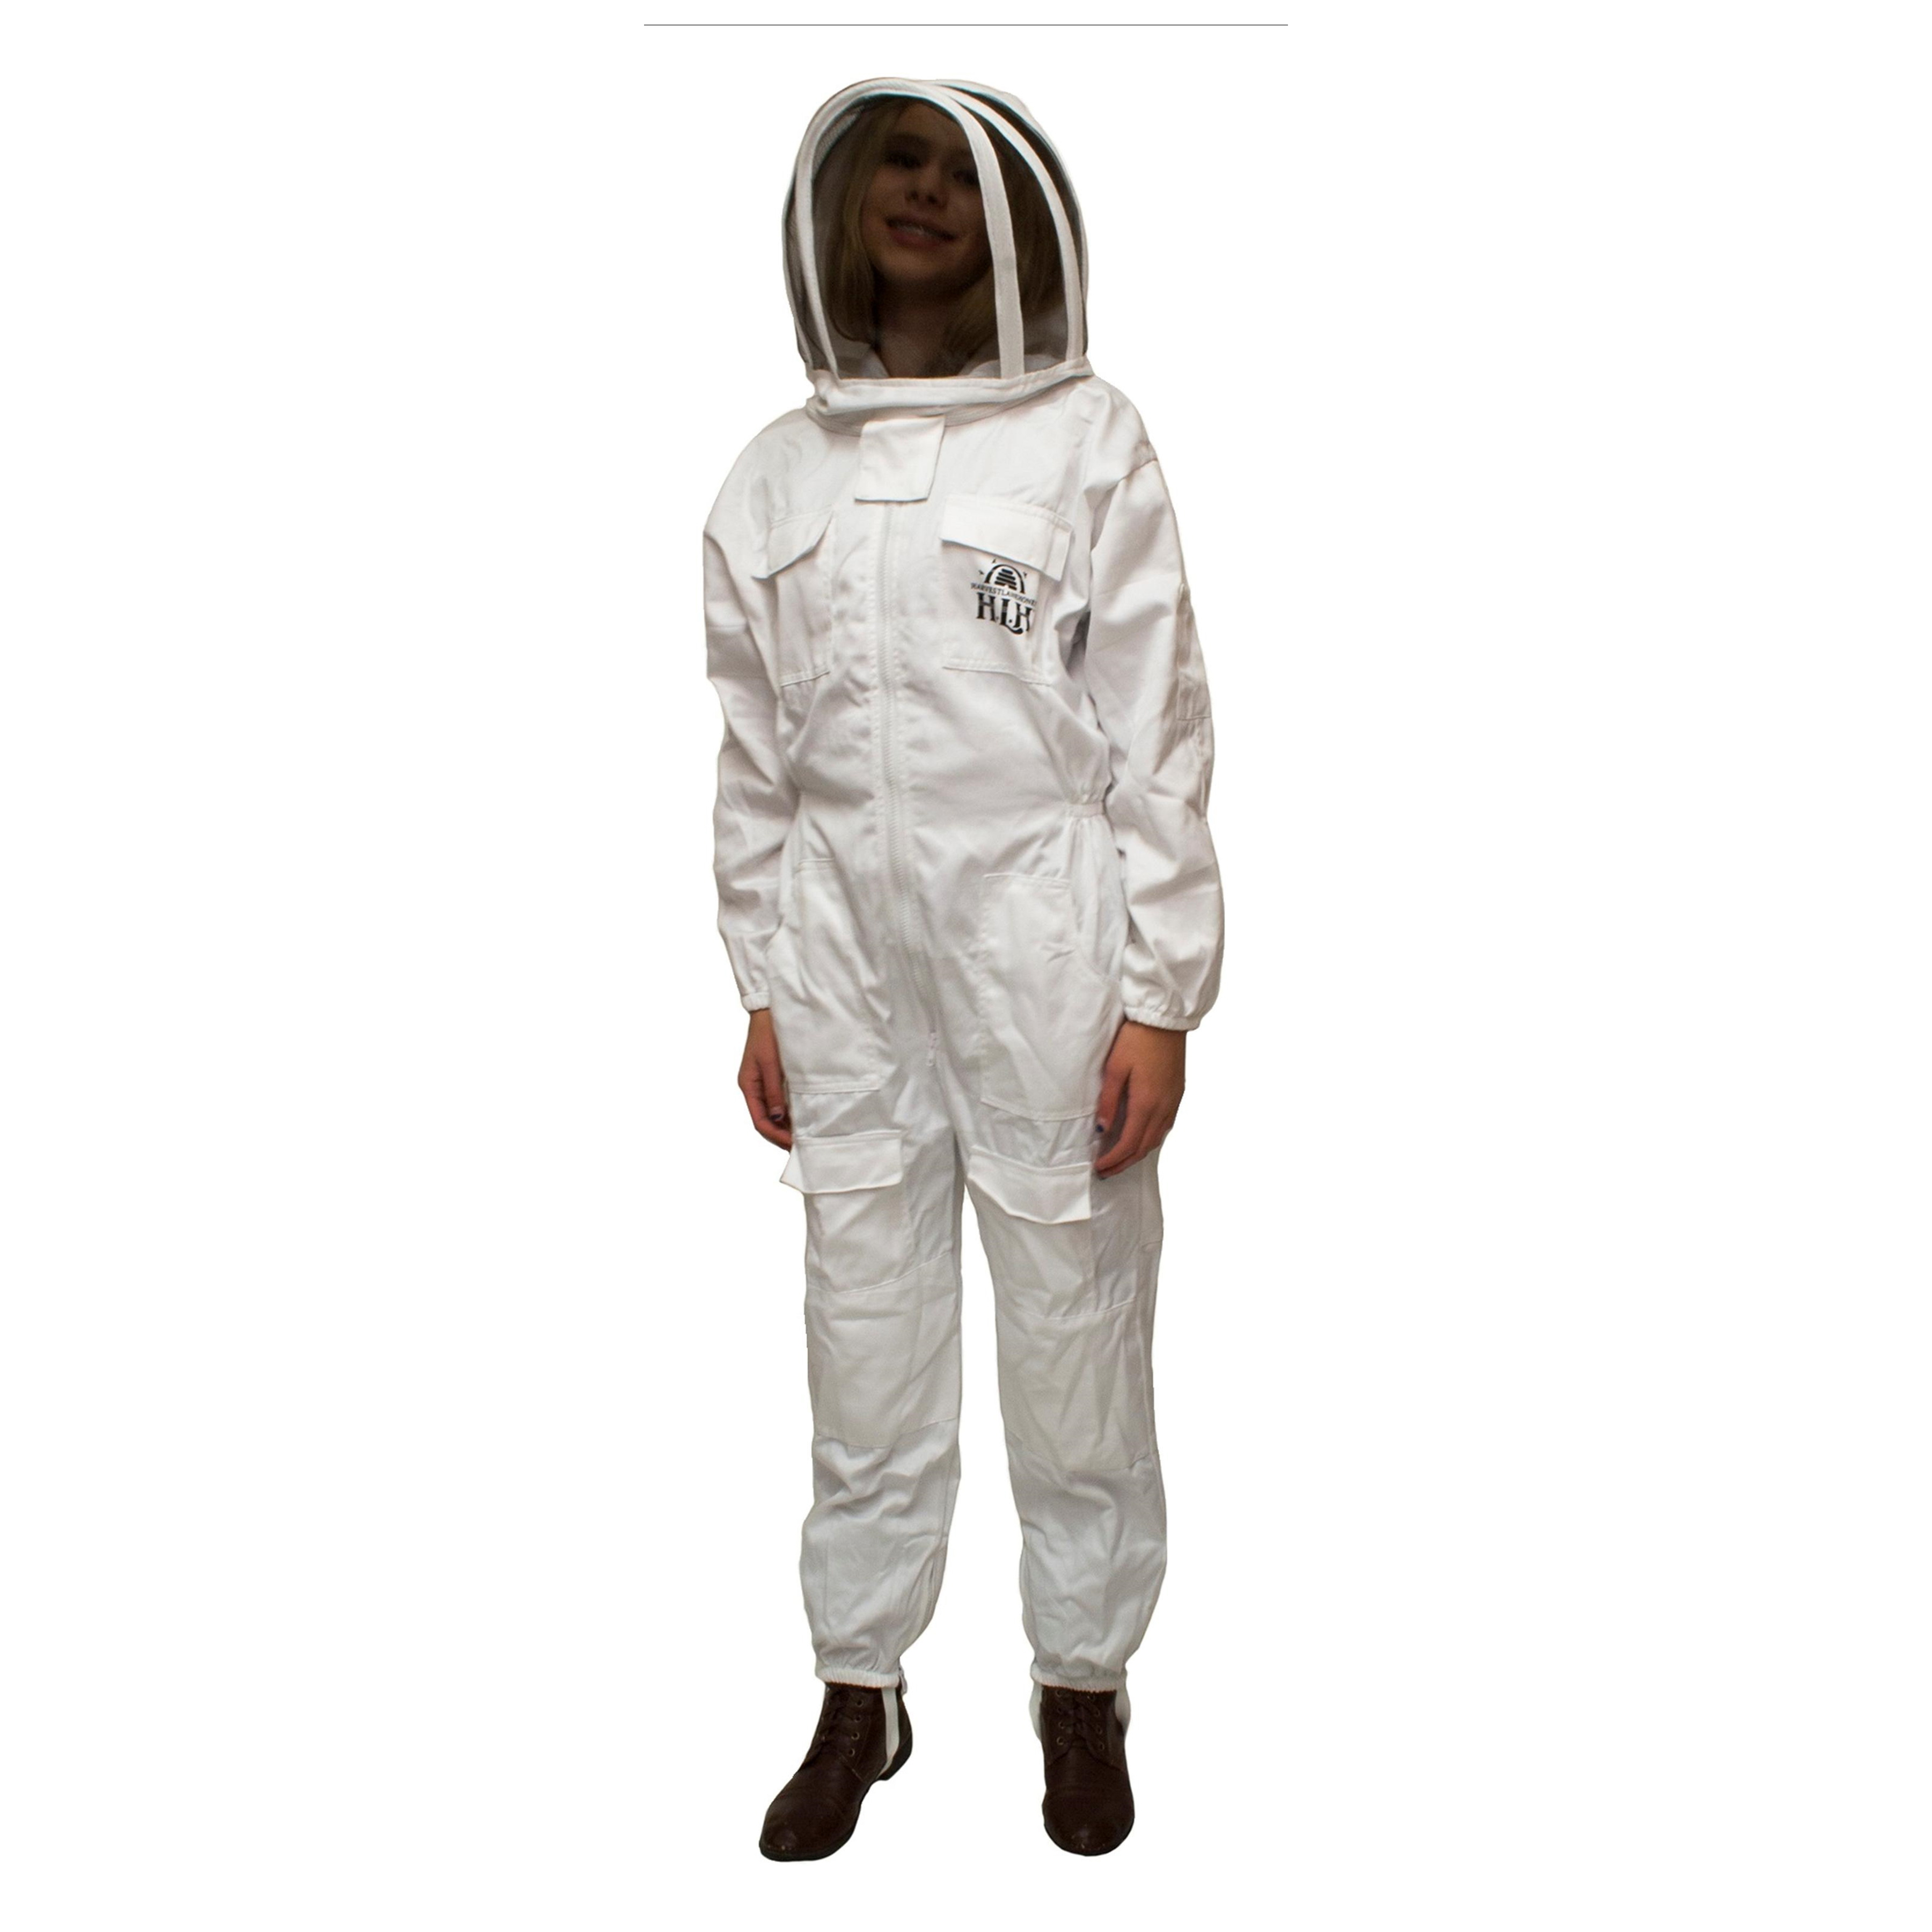 CLOTHSM-101 Beekeeping Suit, M, Zipper, Polycotton